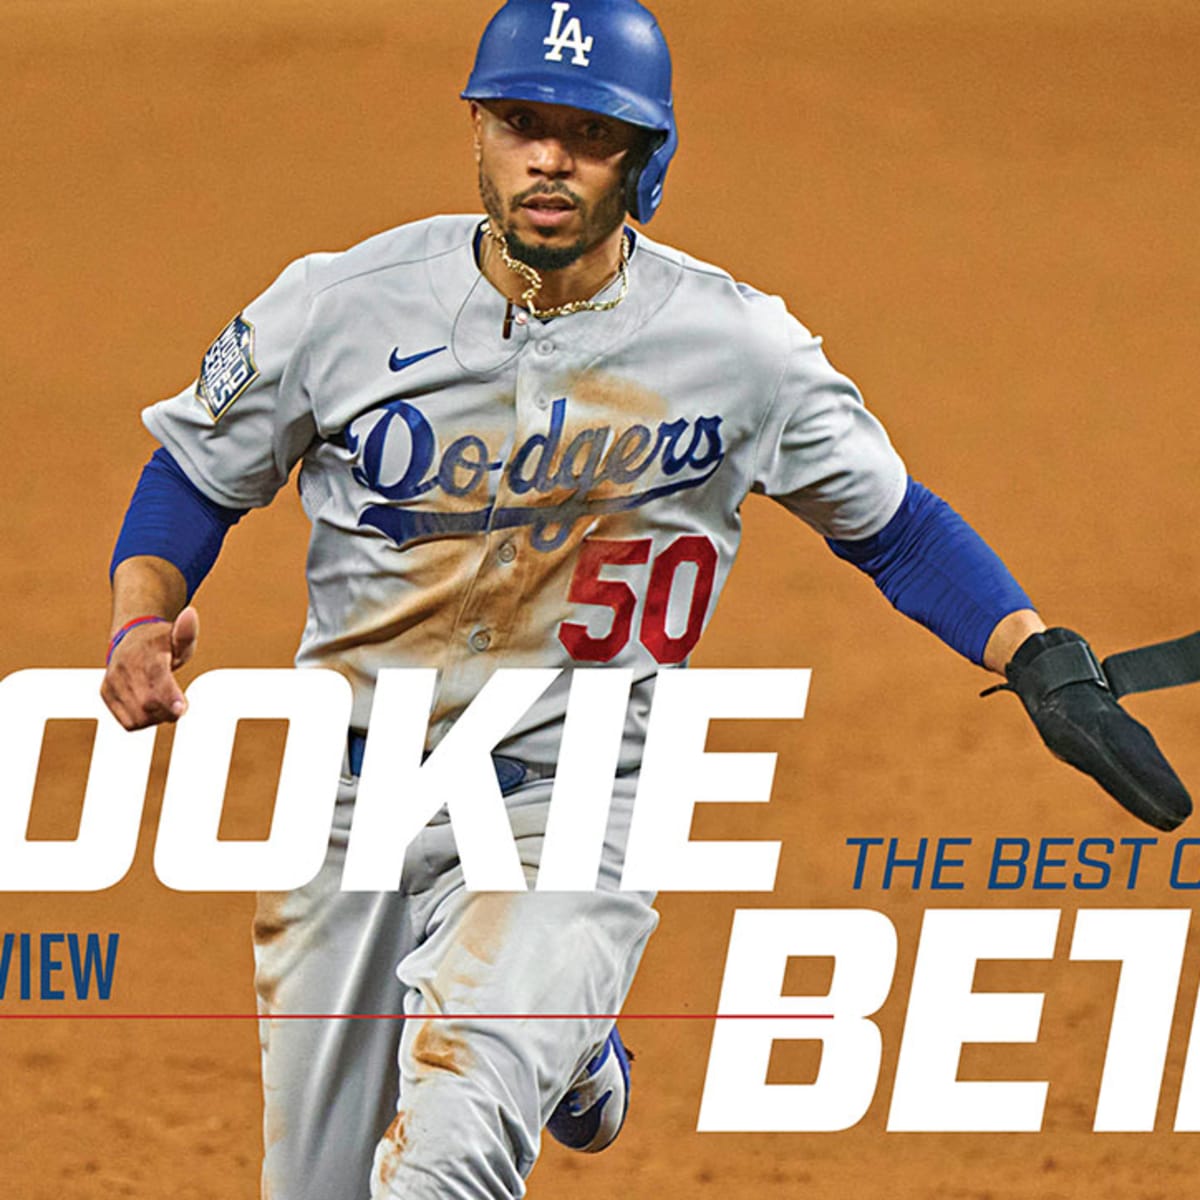 Mookie Betts' rise to baseball star